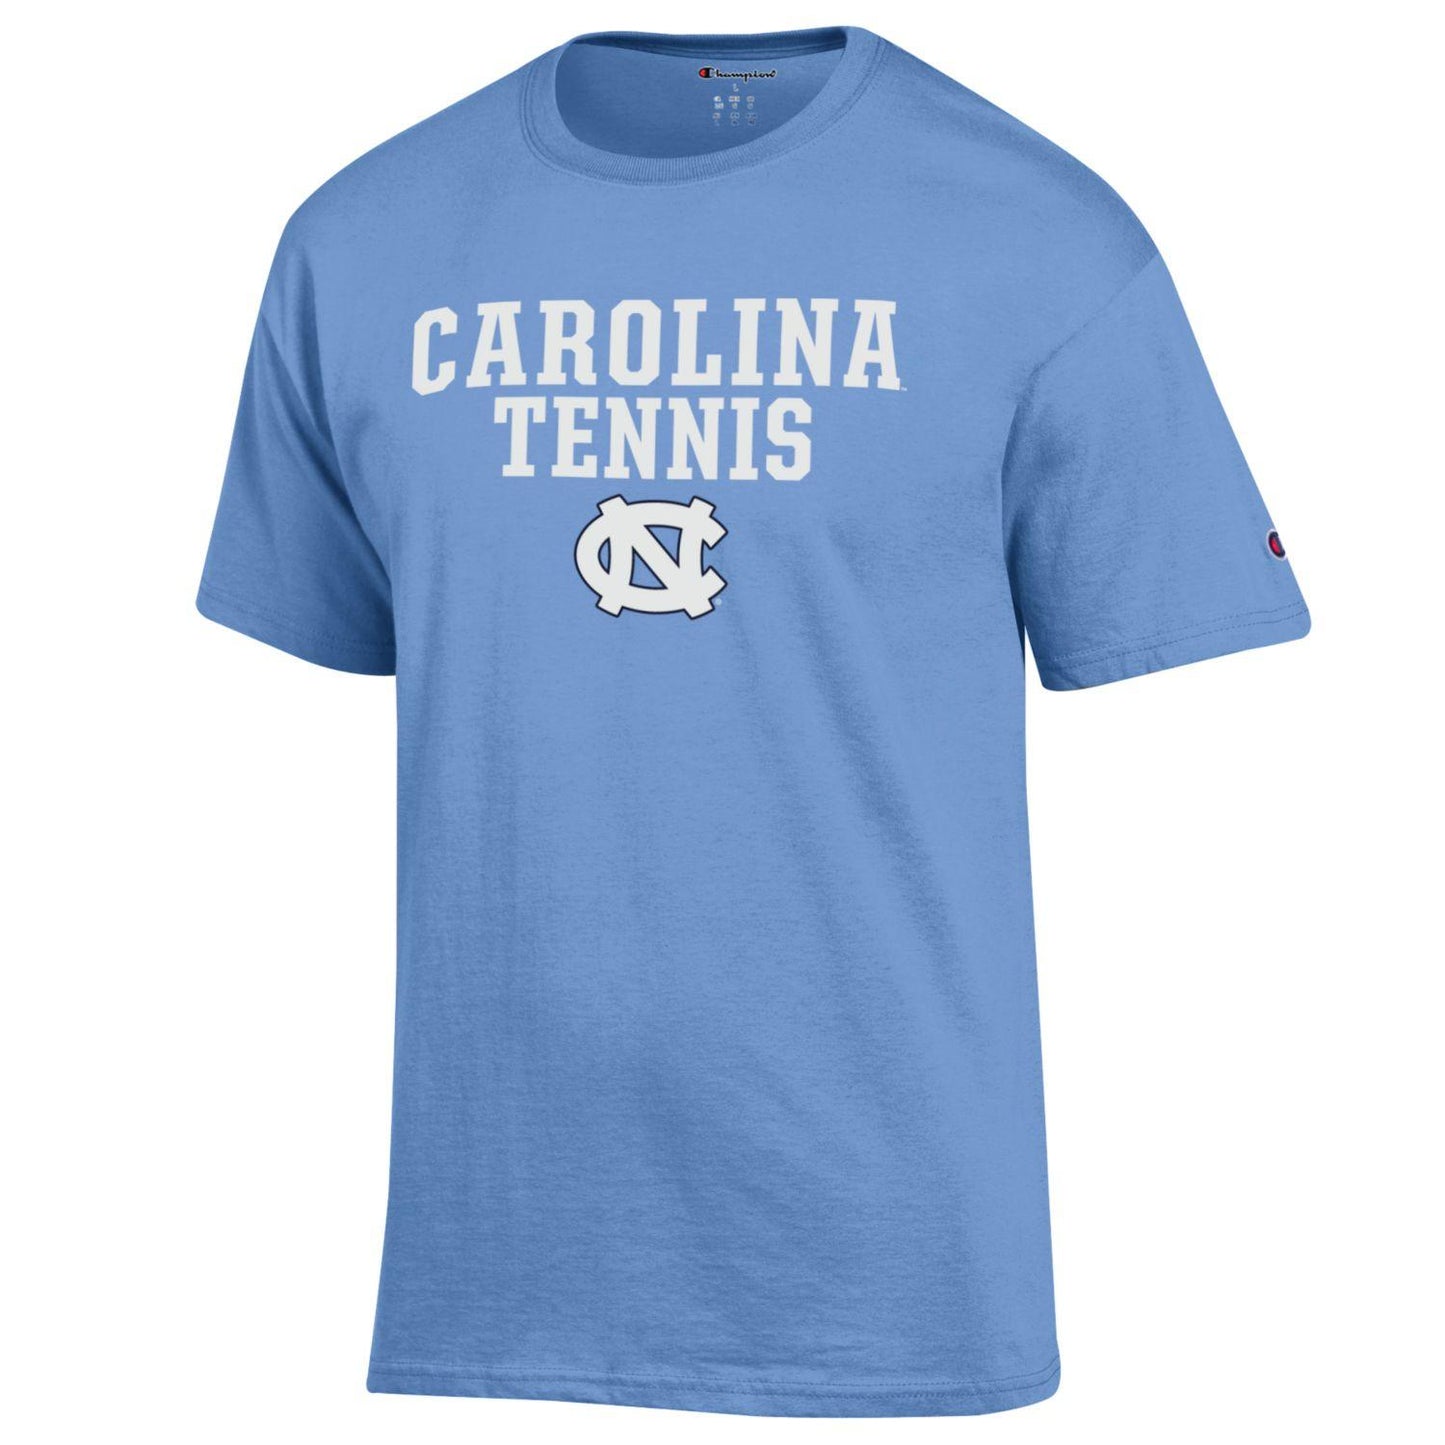 Carolina Tennis T-Shirt with UNC Logo by Champion